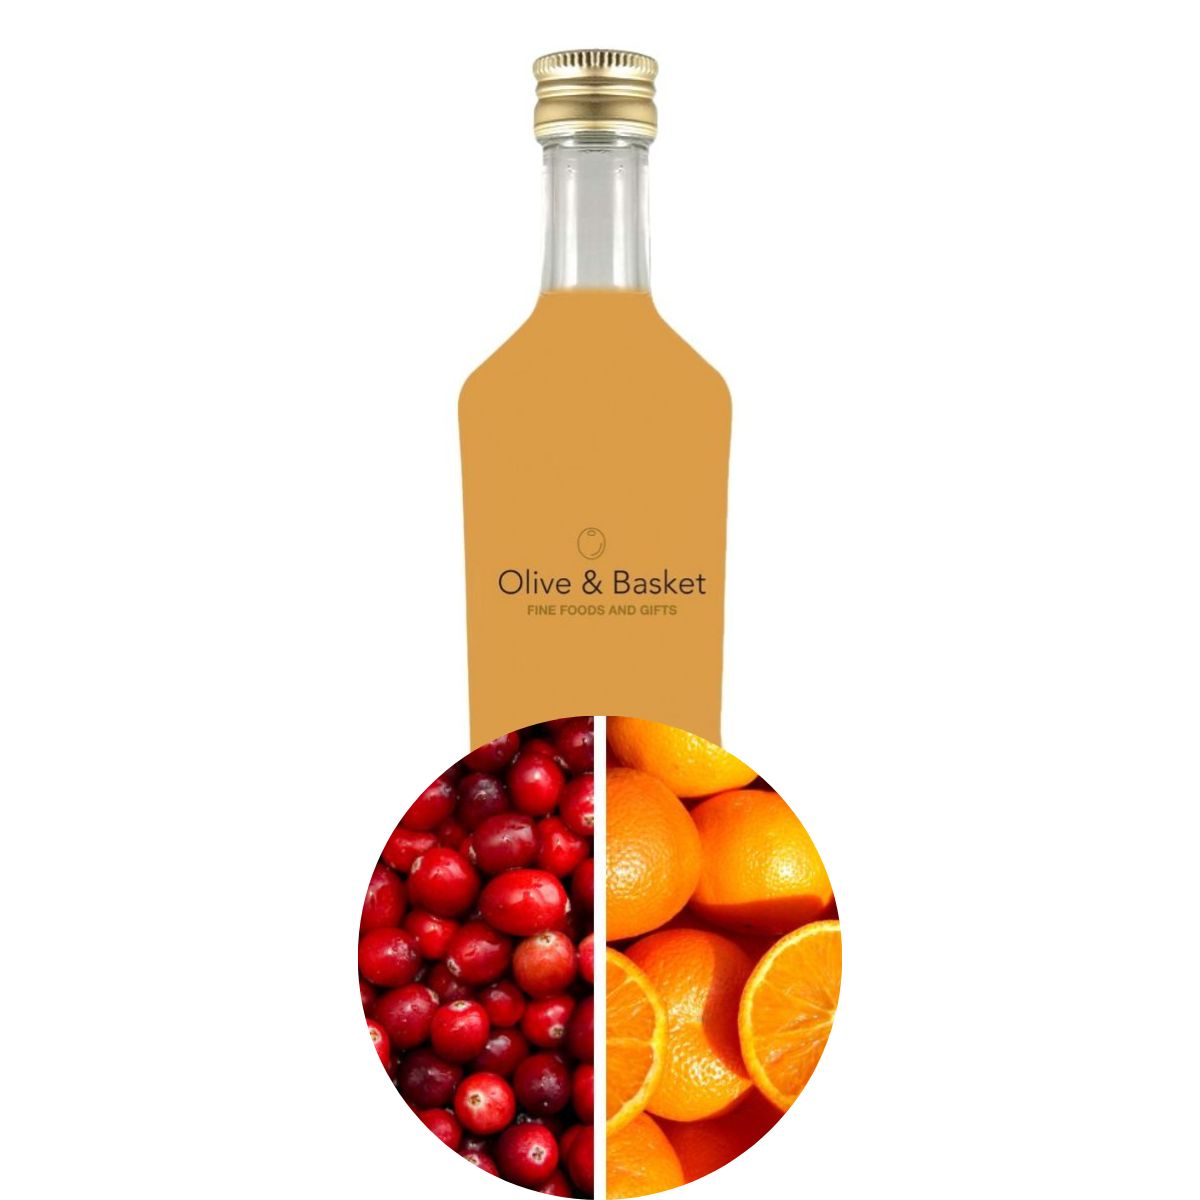 Cranberry Orange White Balsamic Vinegar- Bright and tangy